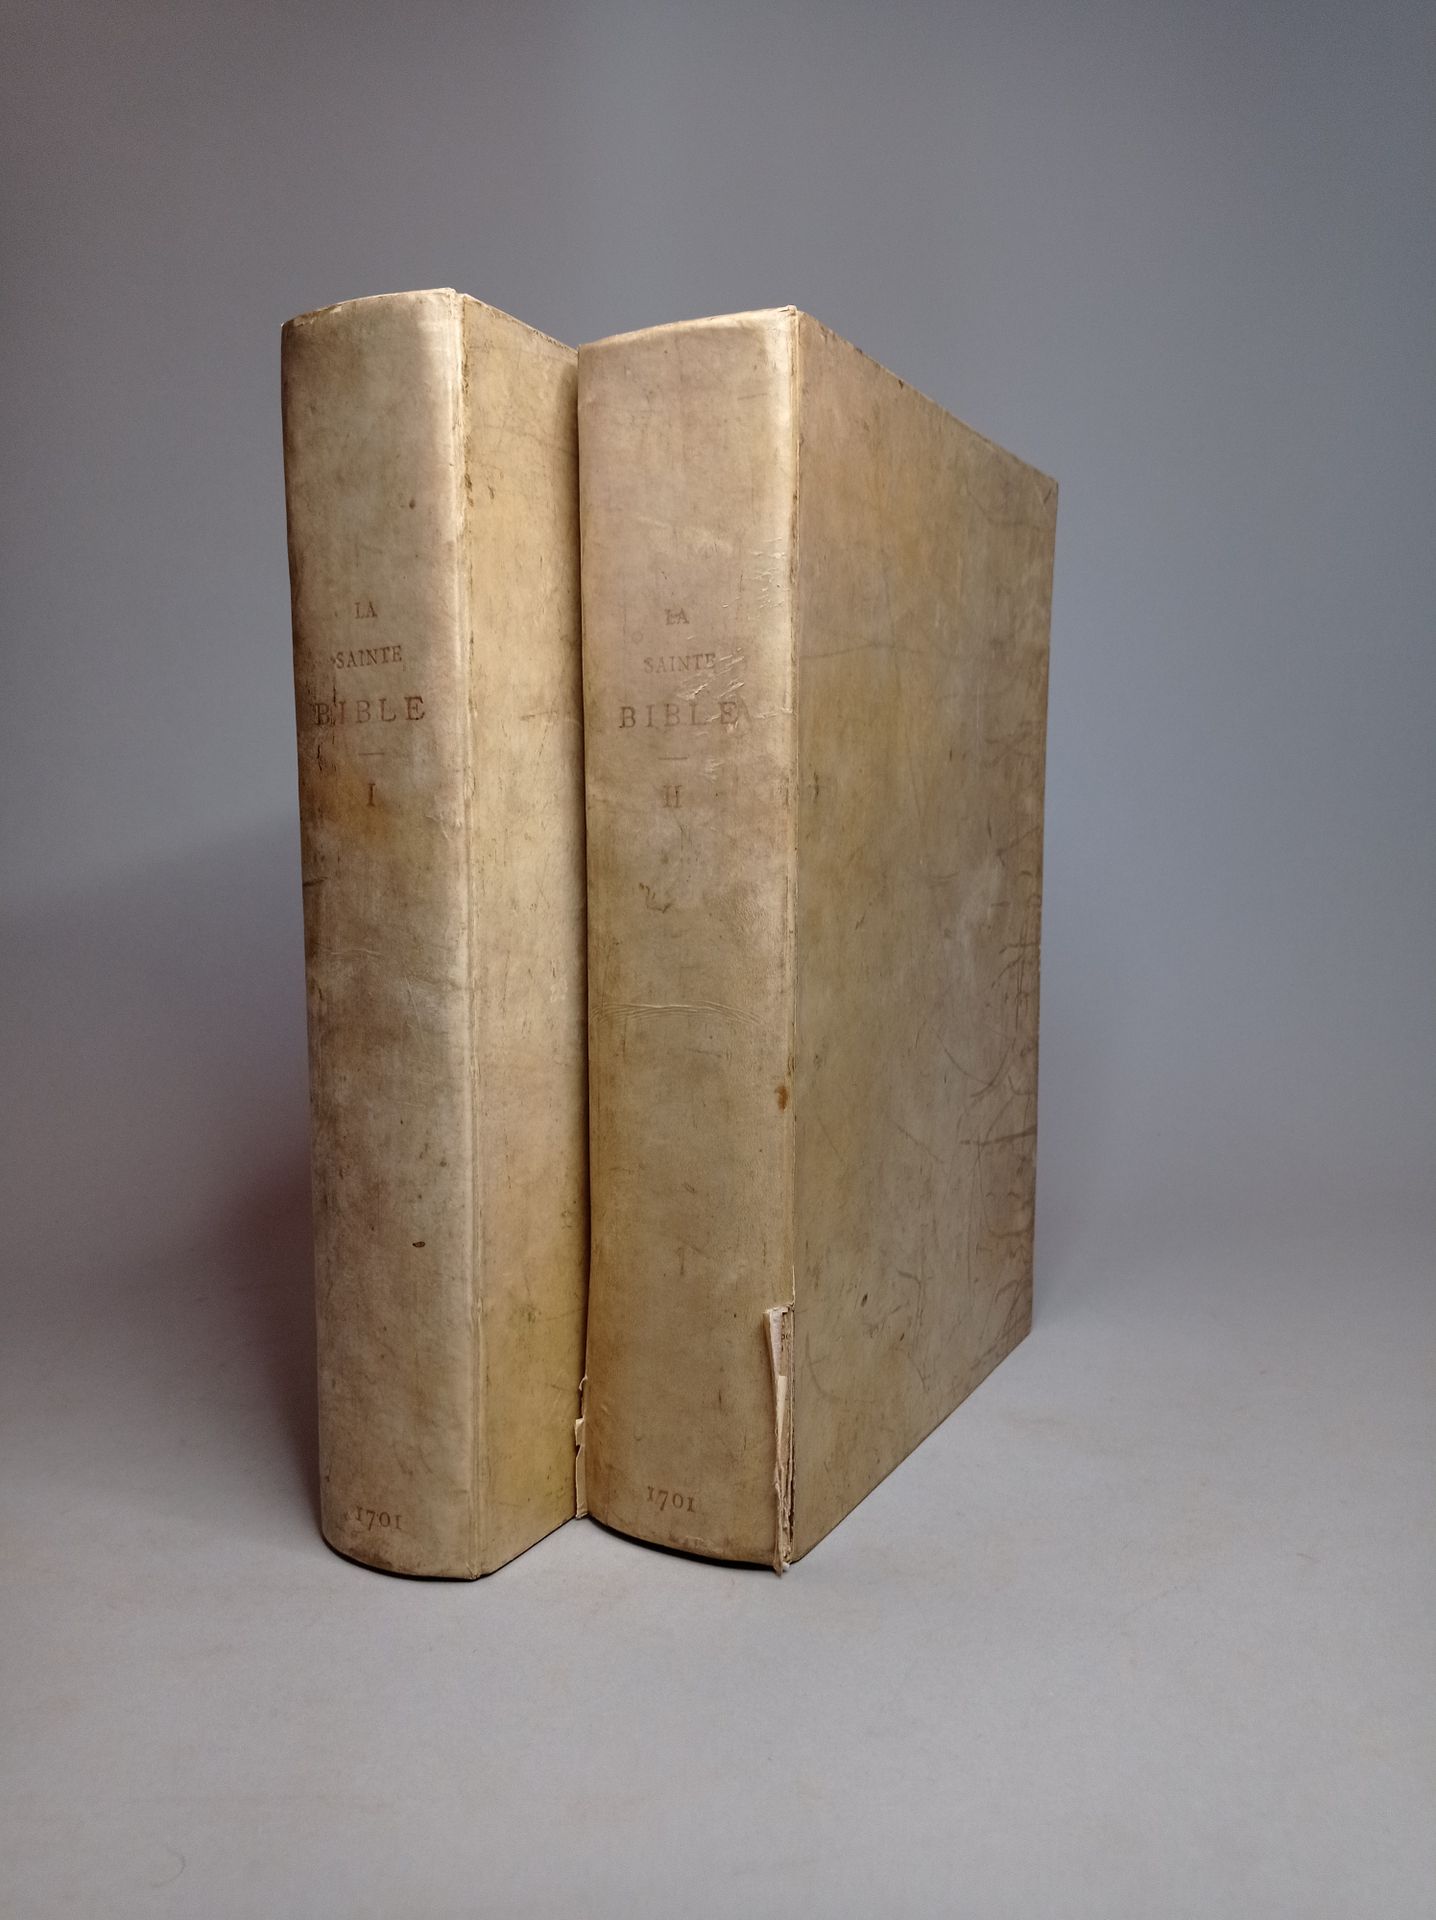 Null 圣经》。- 翻译成法语的《圣经》，旁边是武加大的拉丁文...列日，让-弗朗索瓦-布朗卡，1701年。4部分共2卷，折叠式，硬牛皮纸，书脊上有鎏金标题（&hellip;